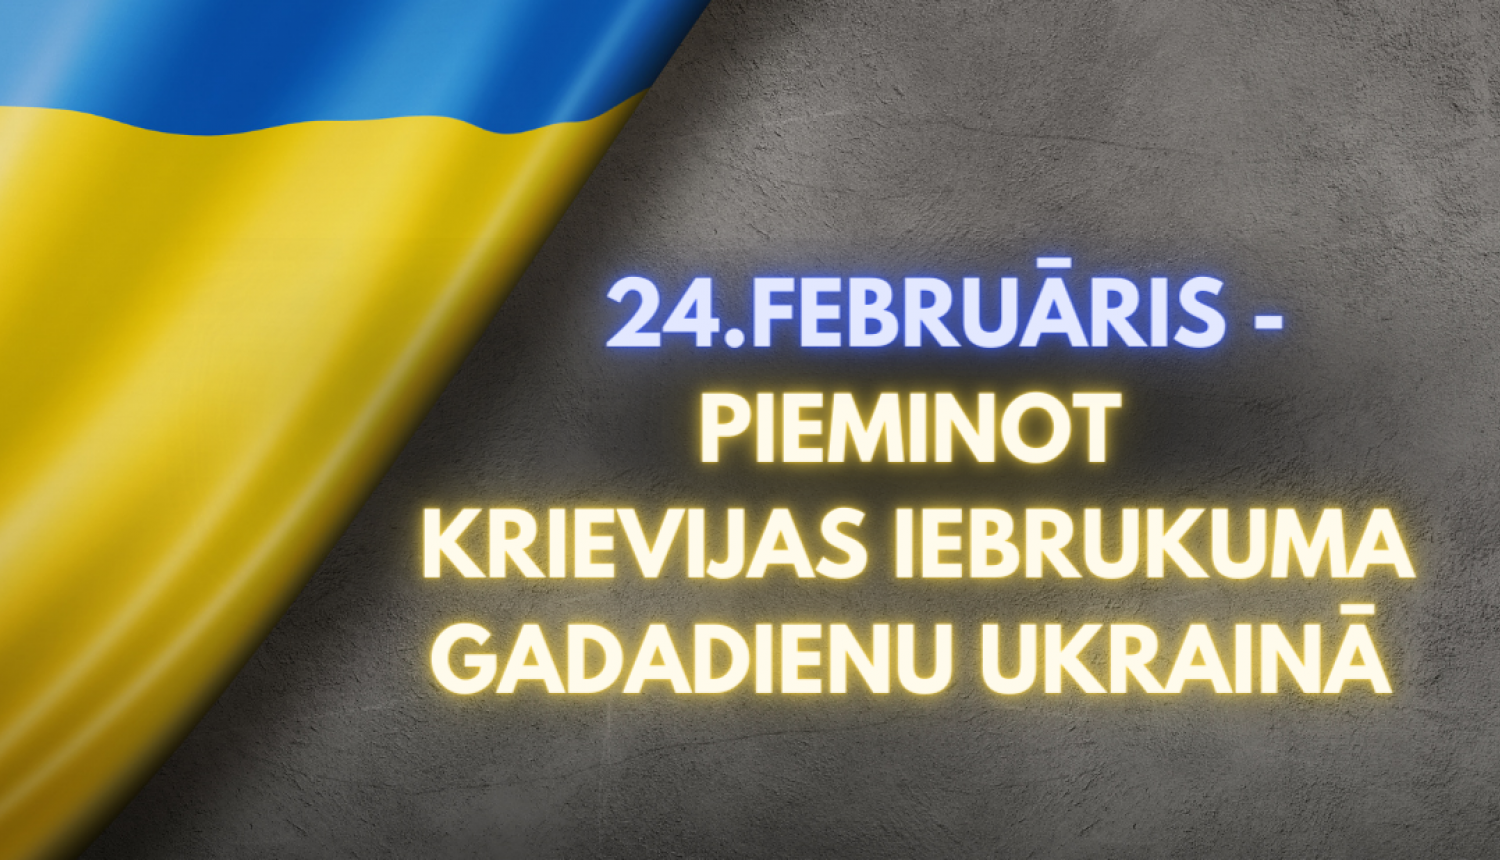 Ukraina gadadiena